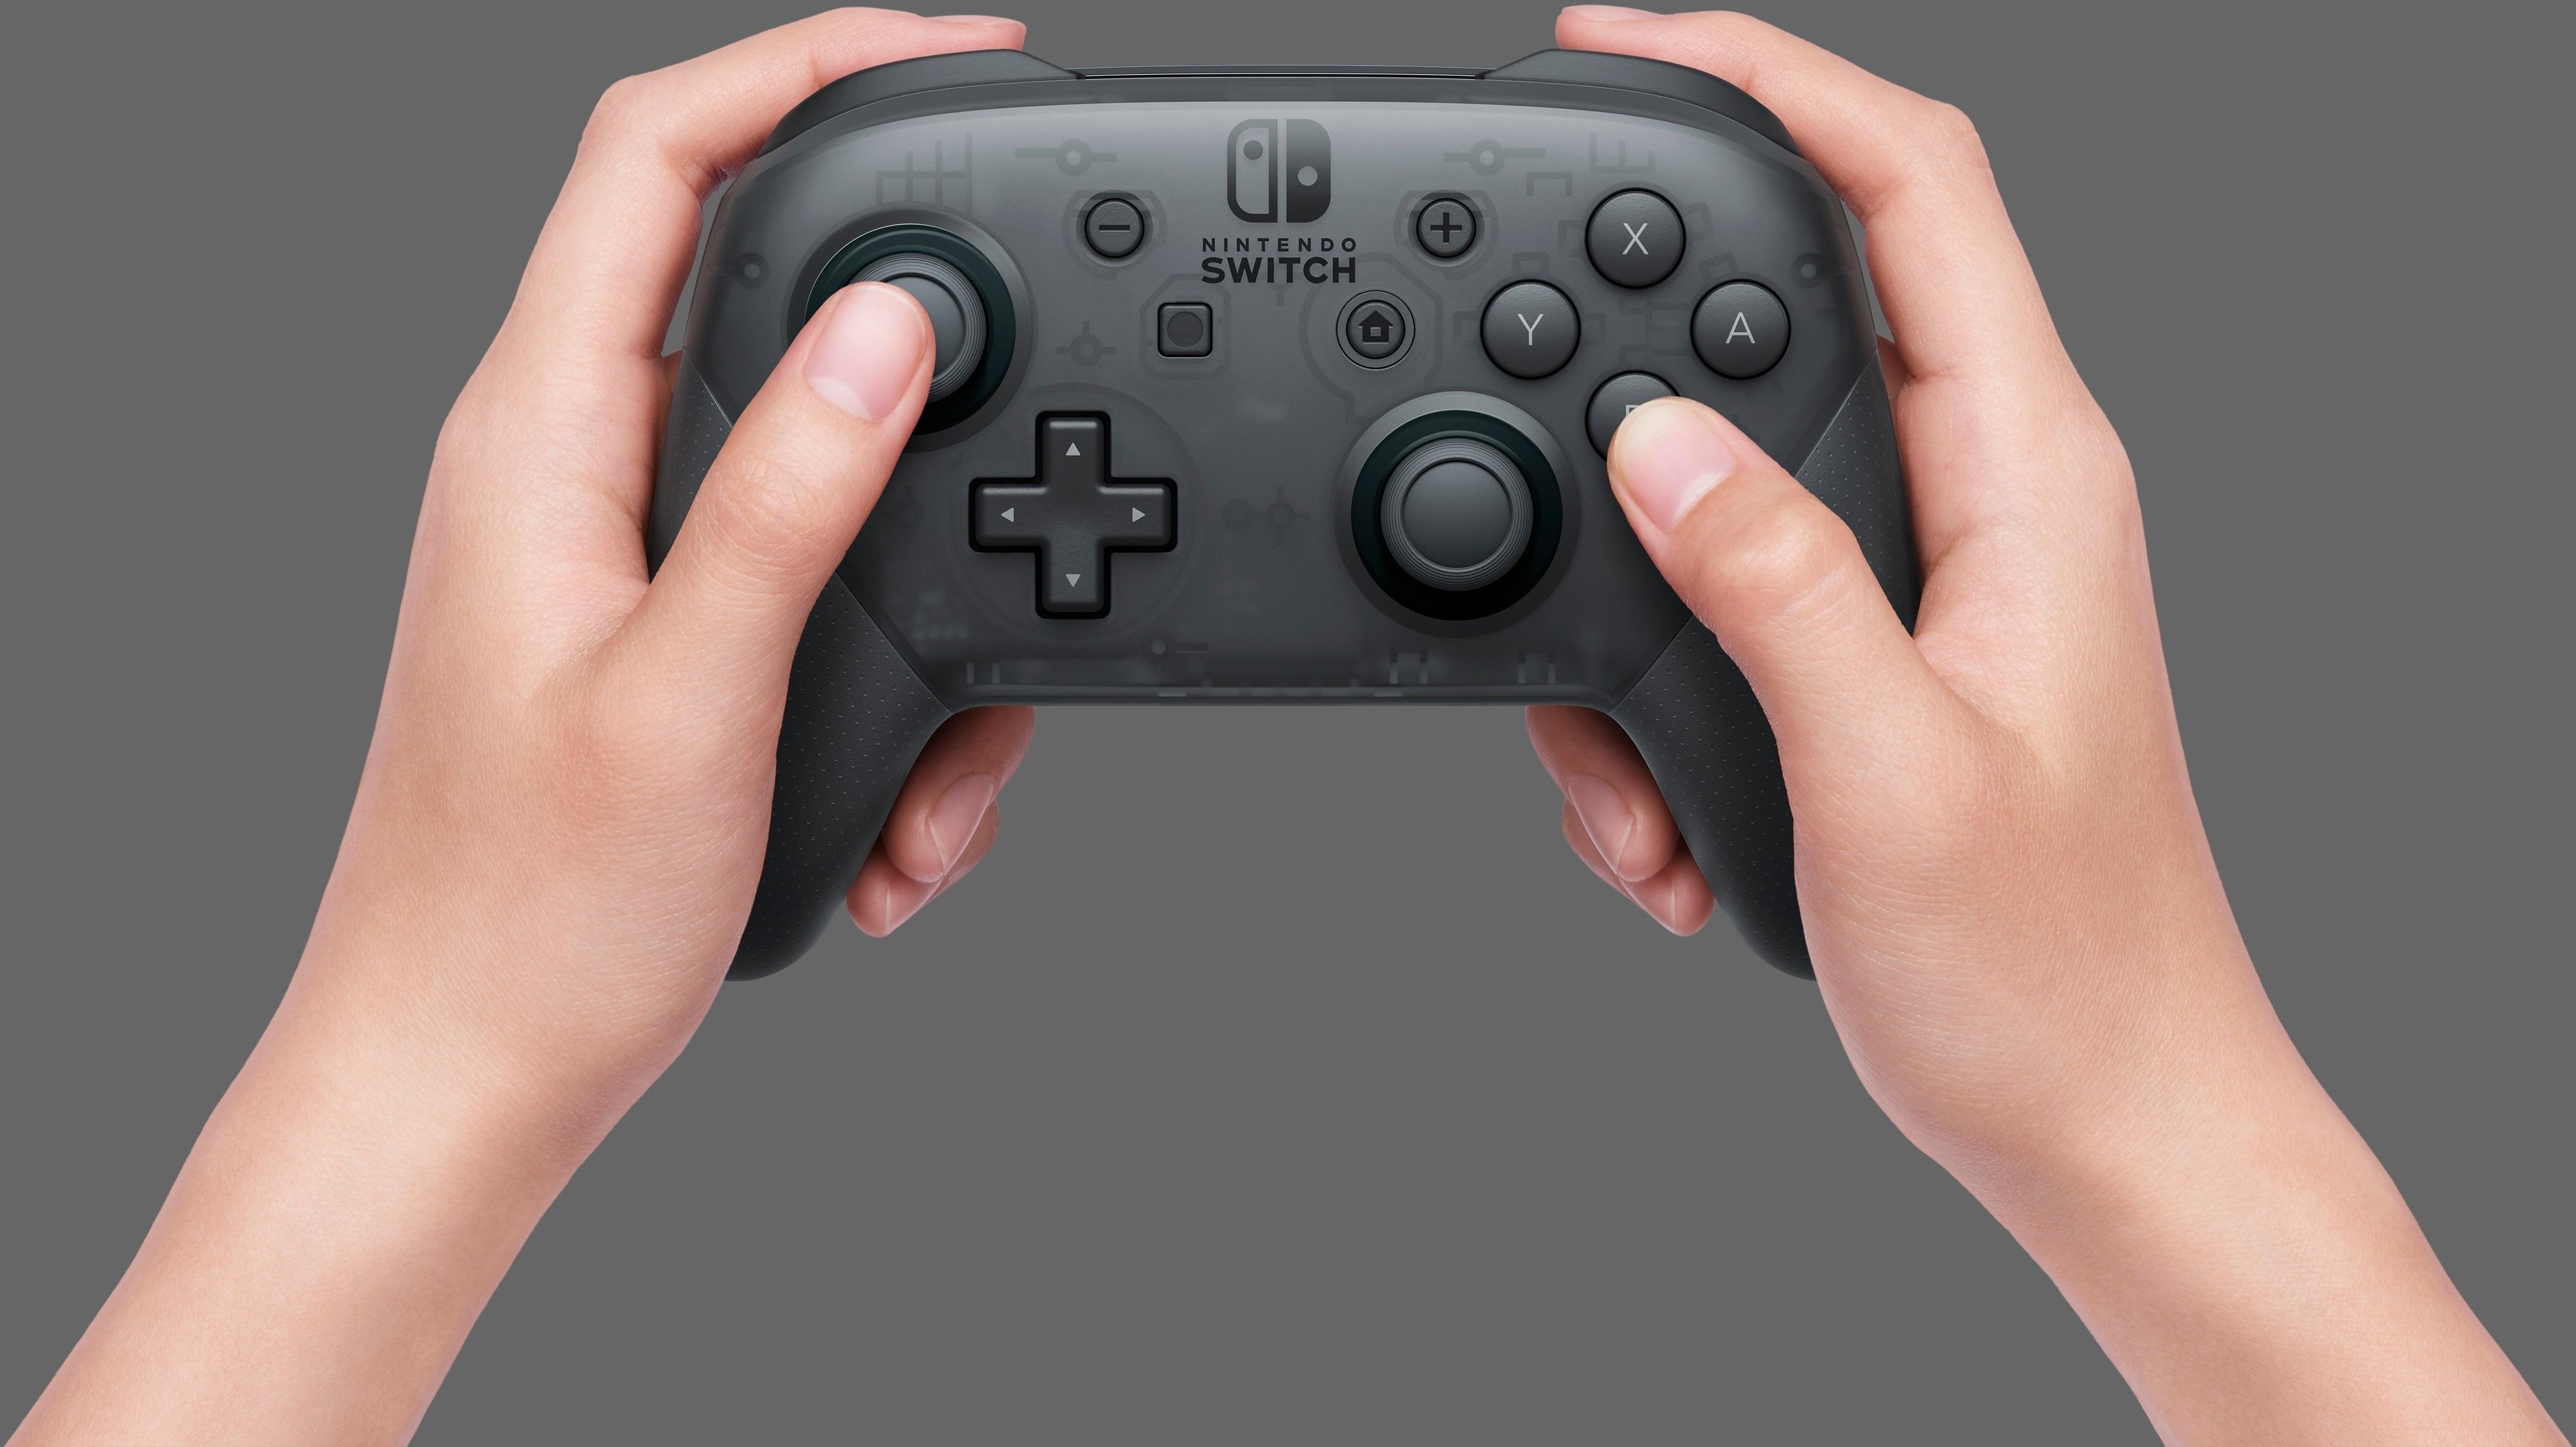 Nintendo Switch Pro Controller,Black,HACAFSSKA,00045496430528 